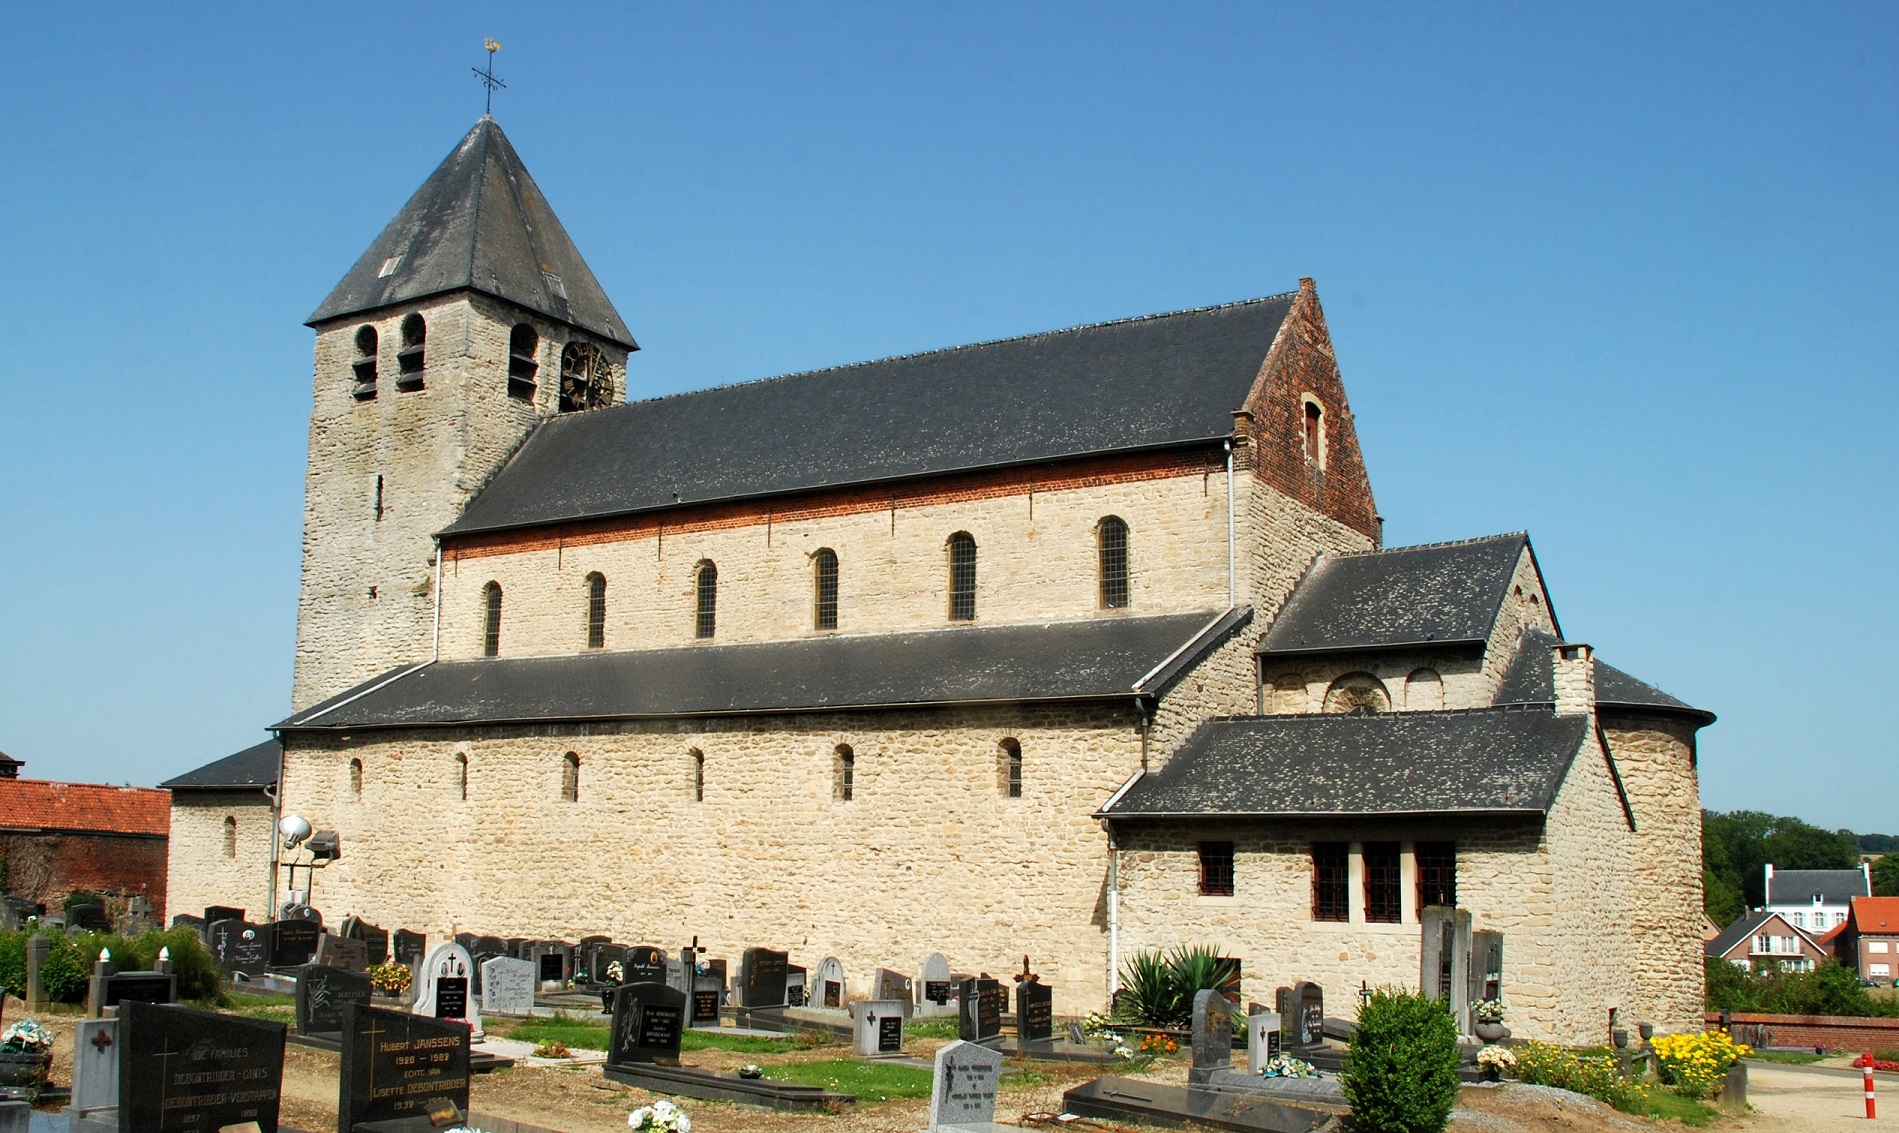 Sint-Pieters Church in Bertem